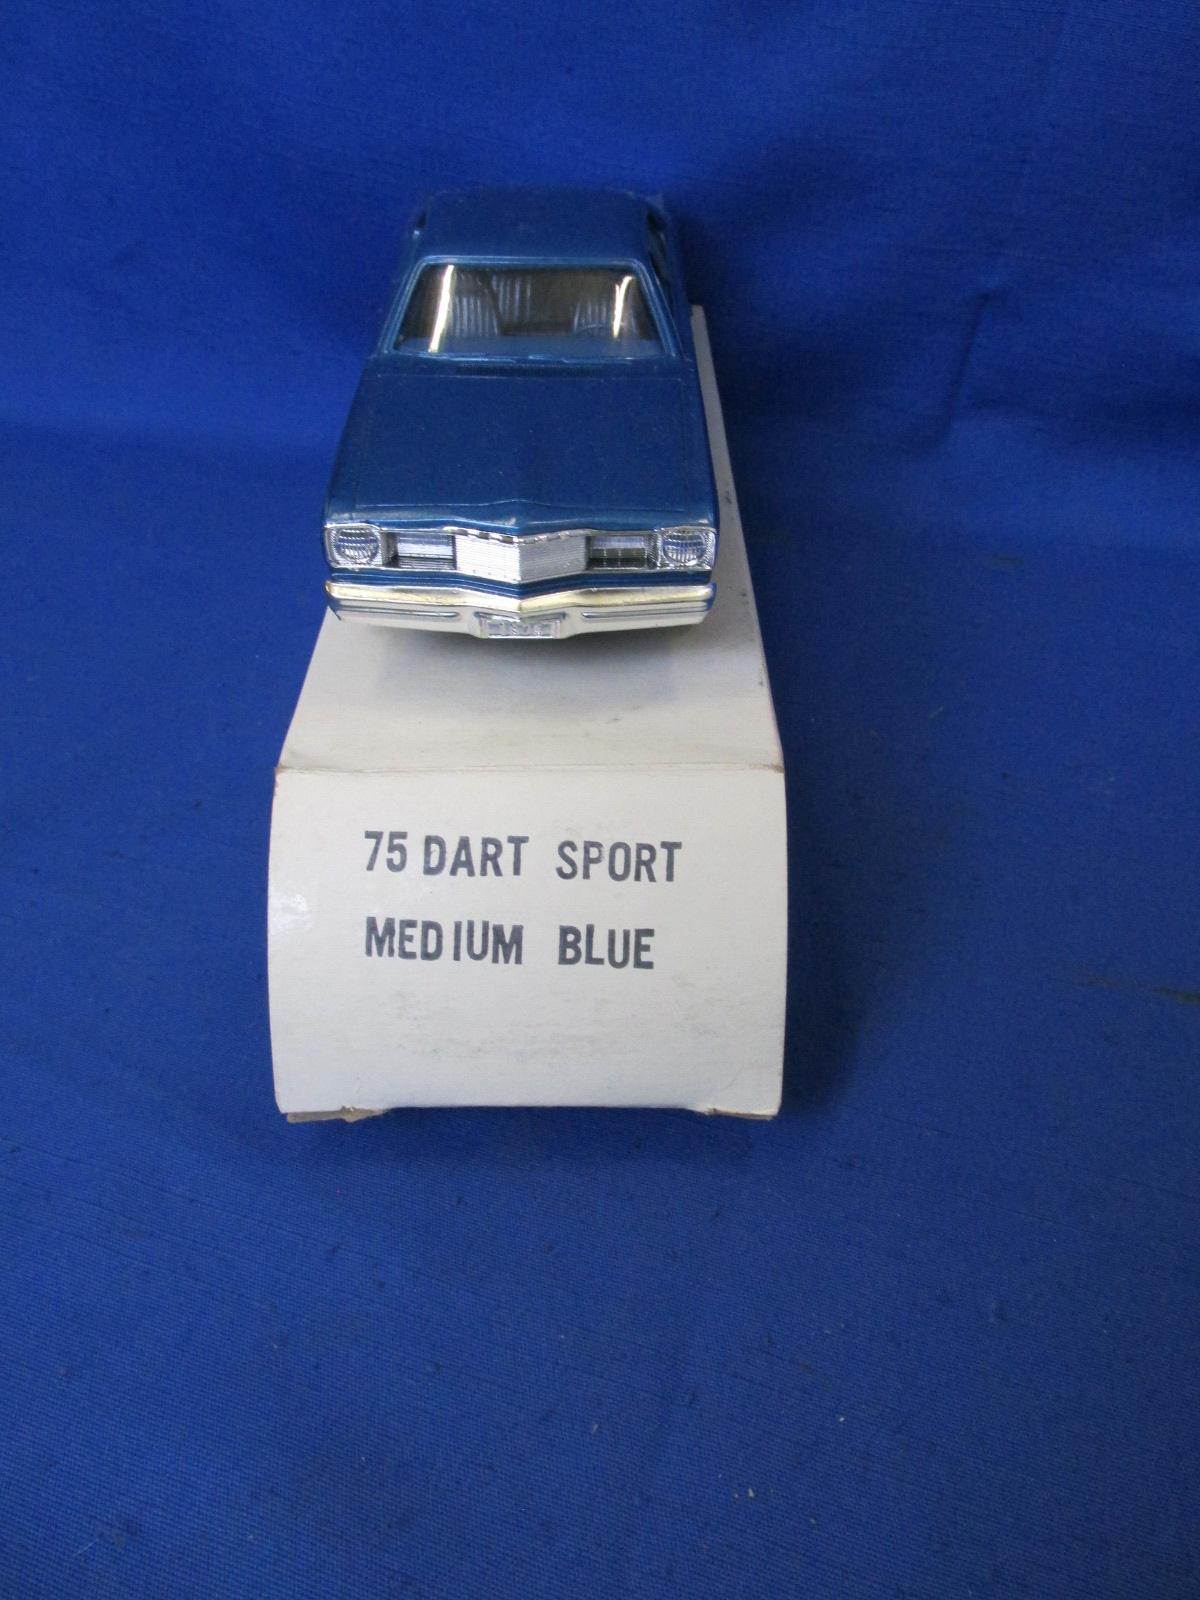 Vintage Dealer Promo In Original Box Featuring “1975 Dodge Dart Sport In Medium Blue” - Nice -